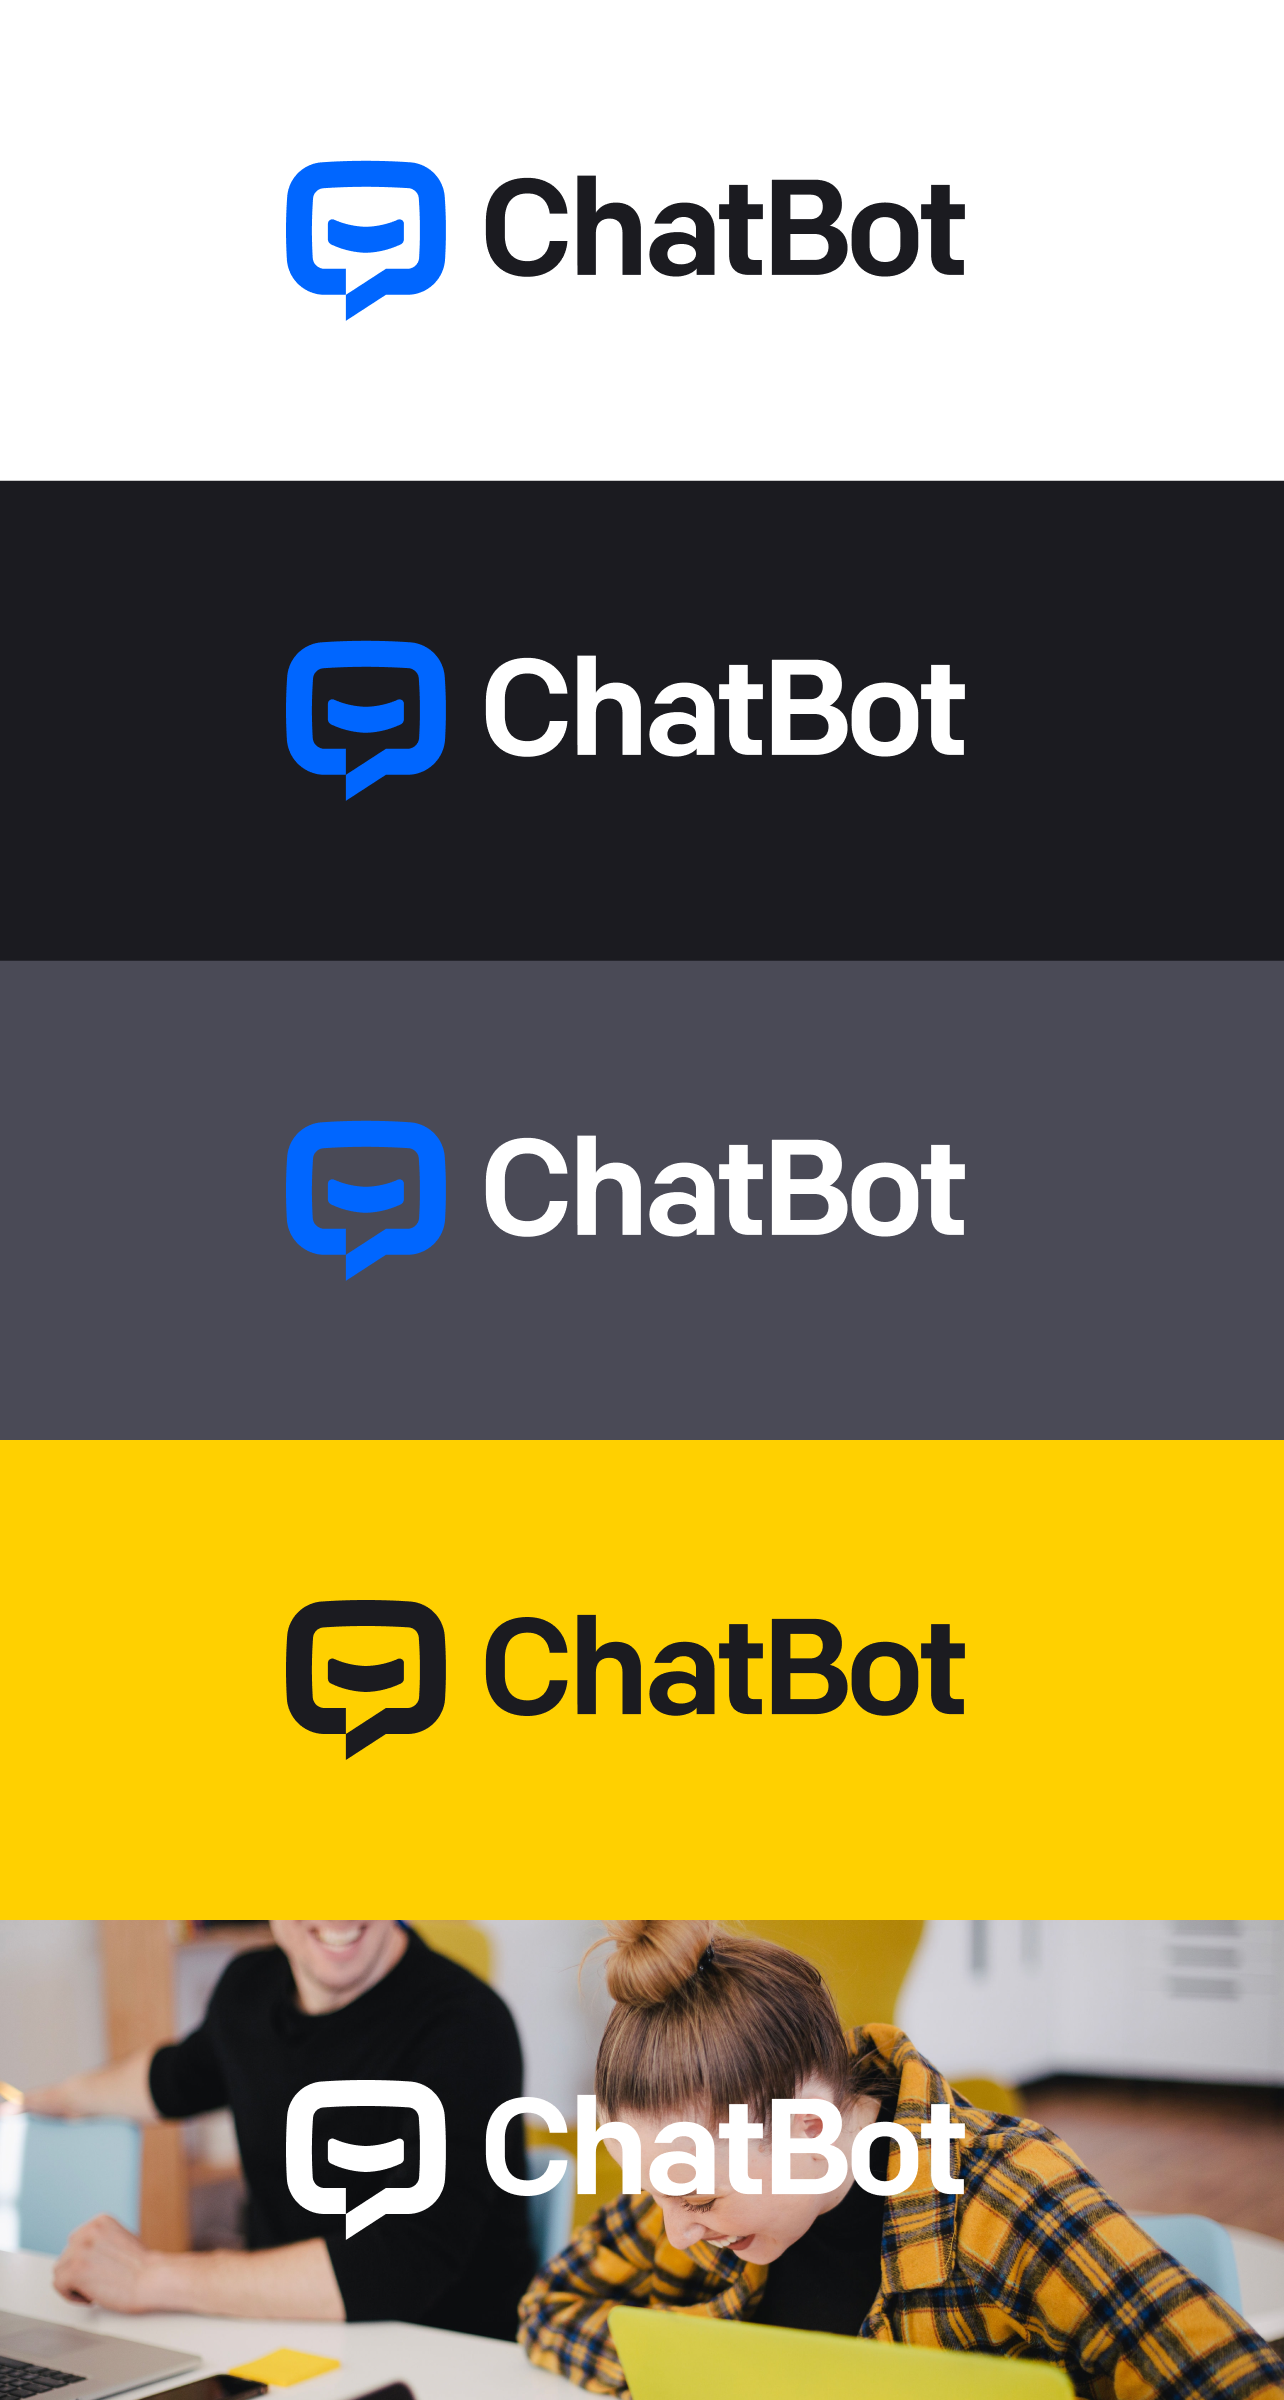 ChatBot logo background usage